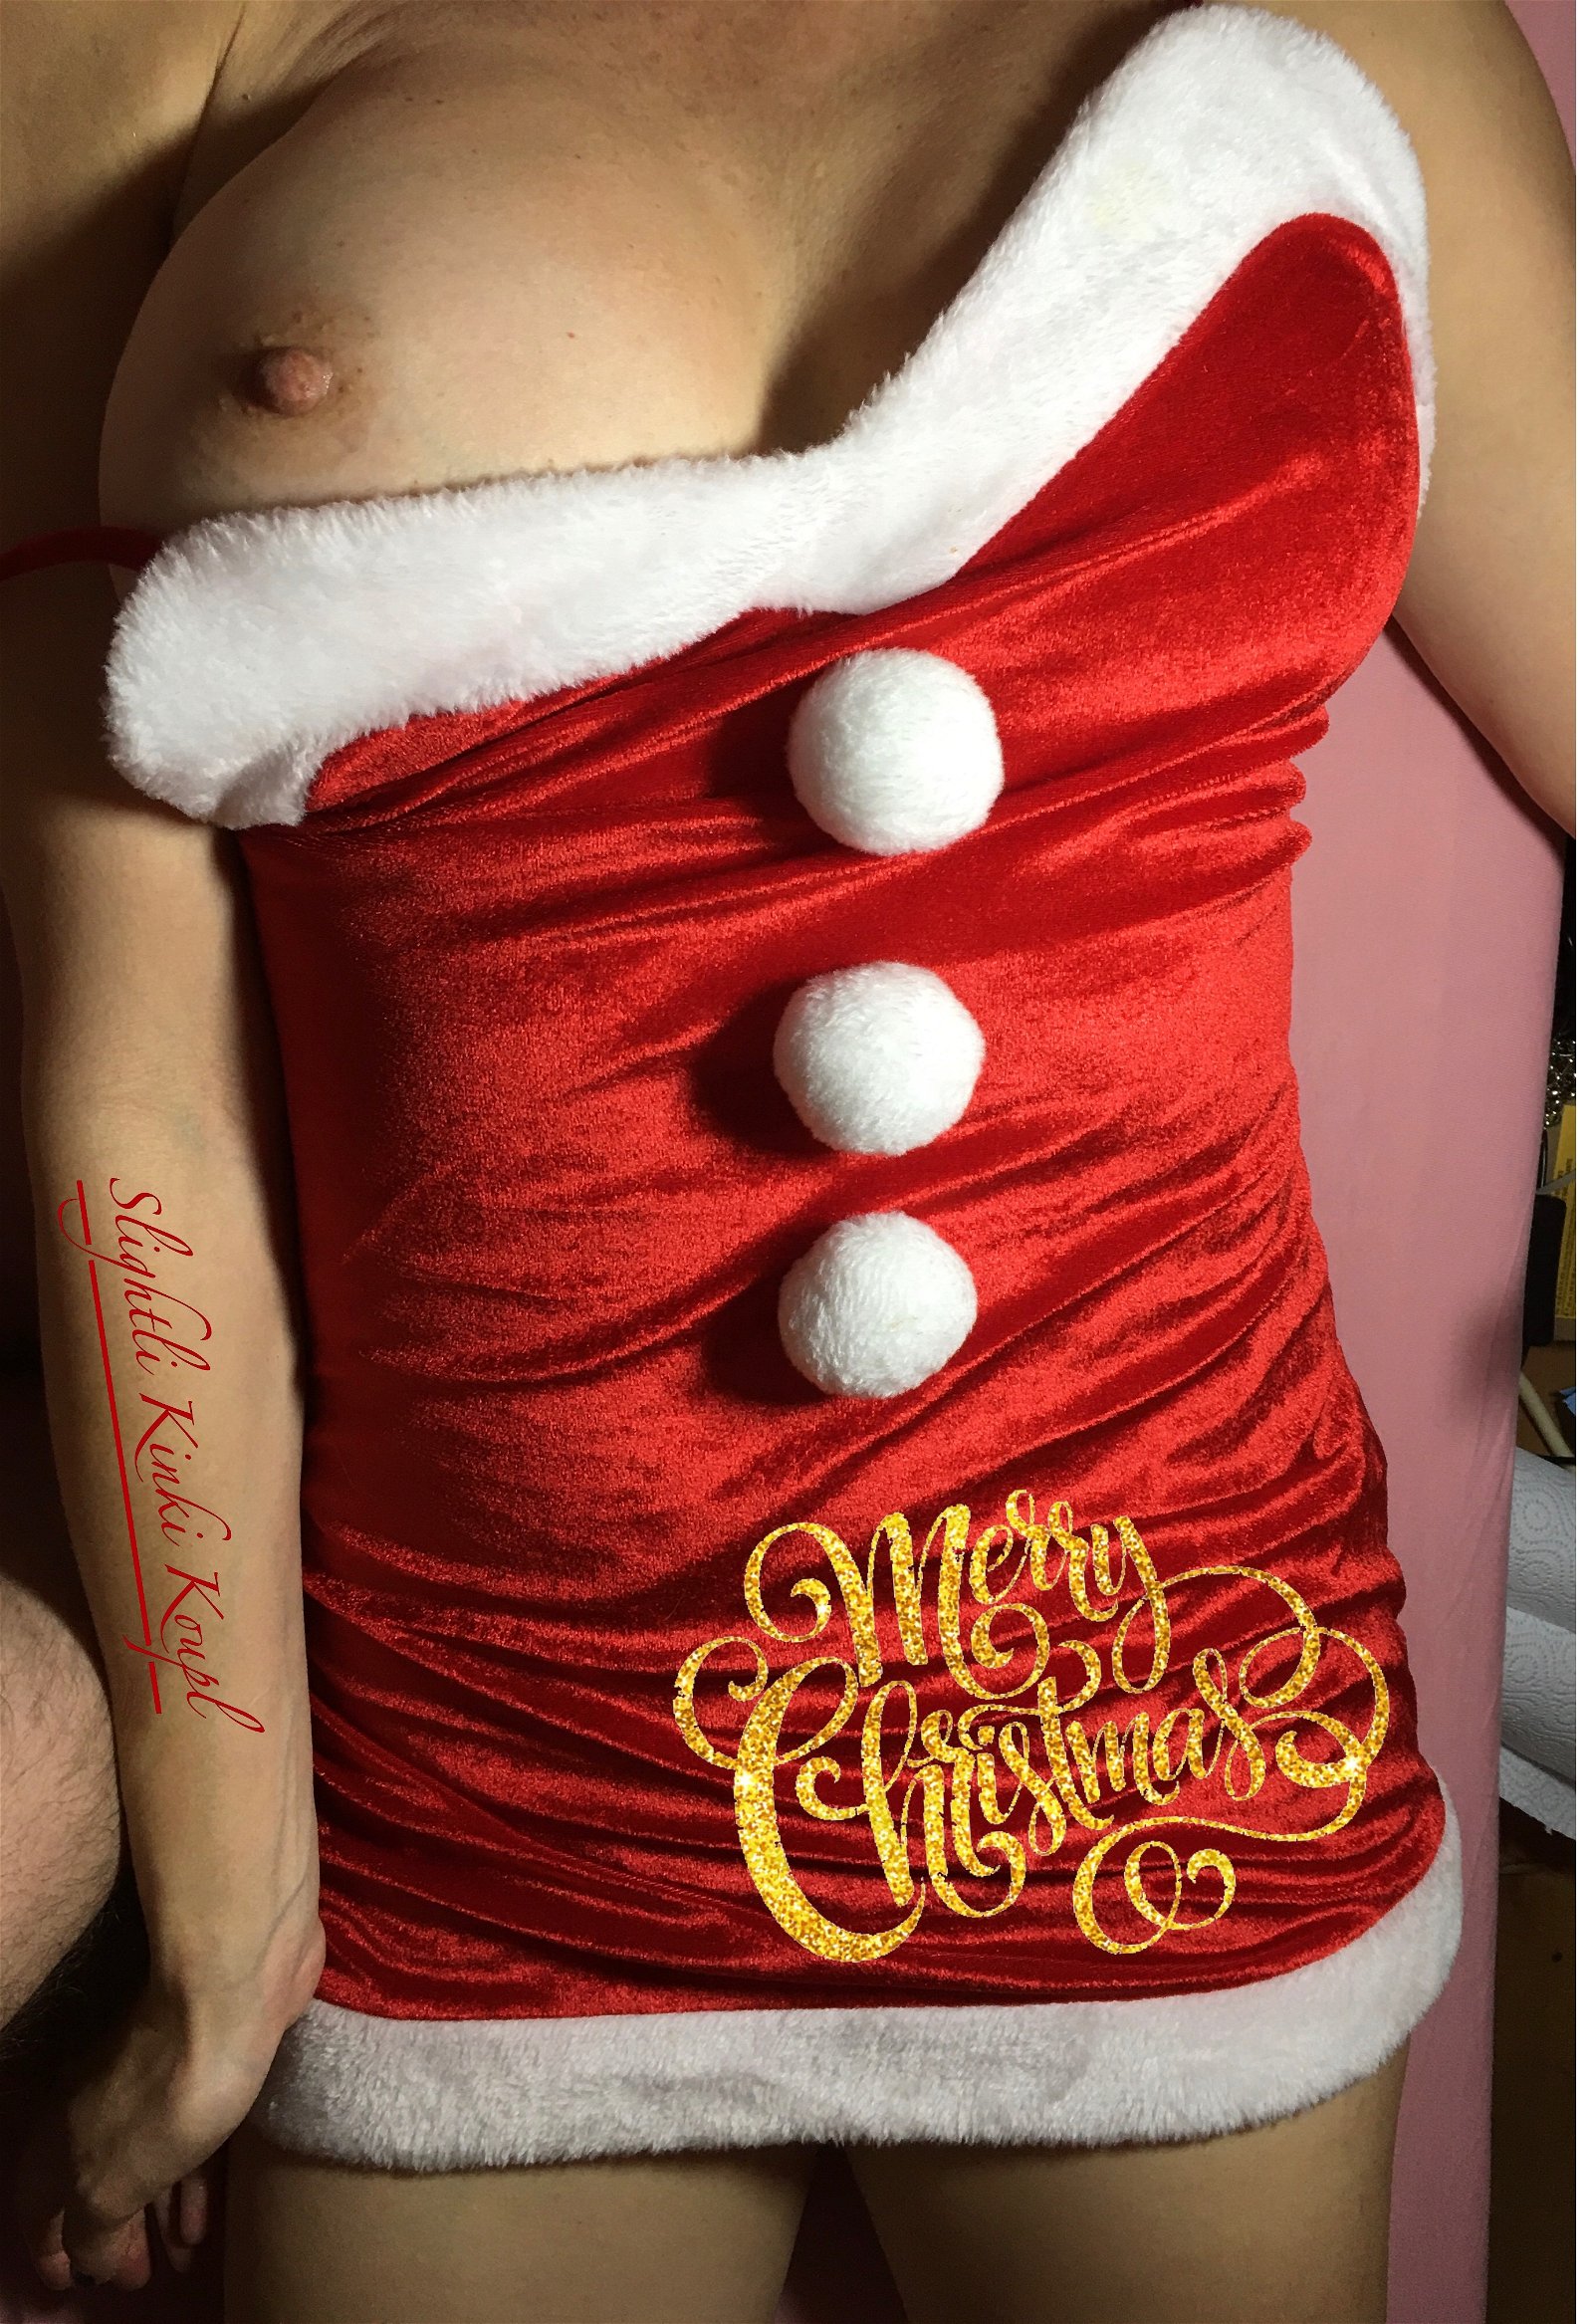 Photo by Slightli Kinki Koupl with the username @SlightliKinkiKoupl, who is a star user,  December 24, 2020 at 10:41 AM and the text says '#Merry #XXX #Mas'